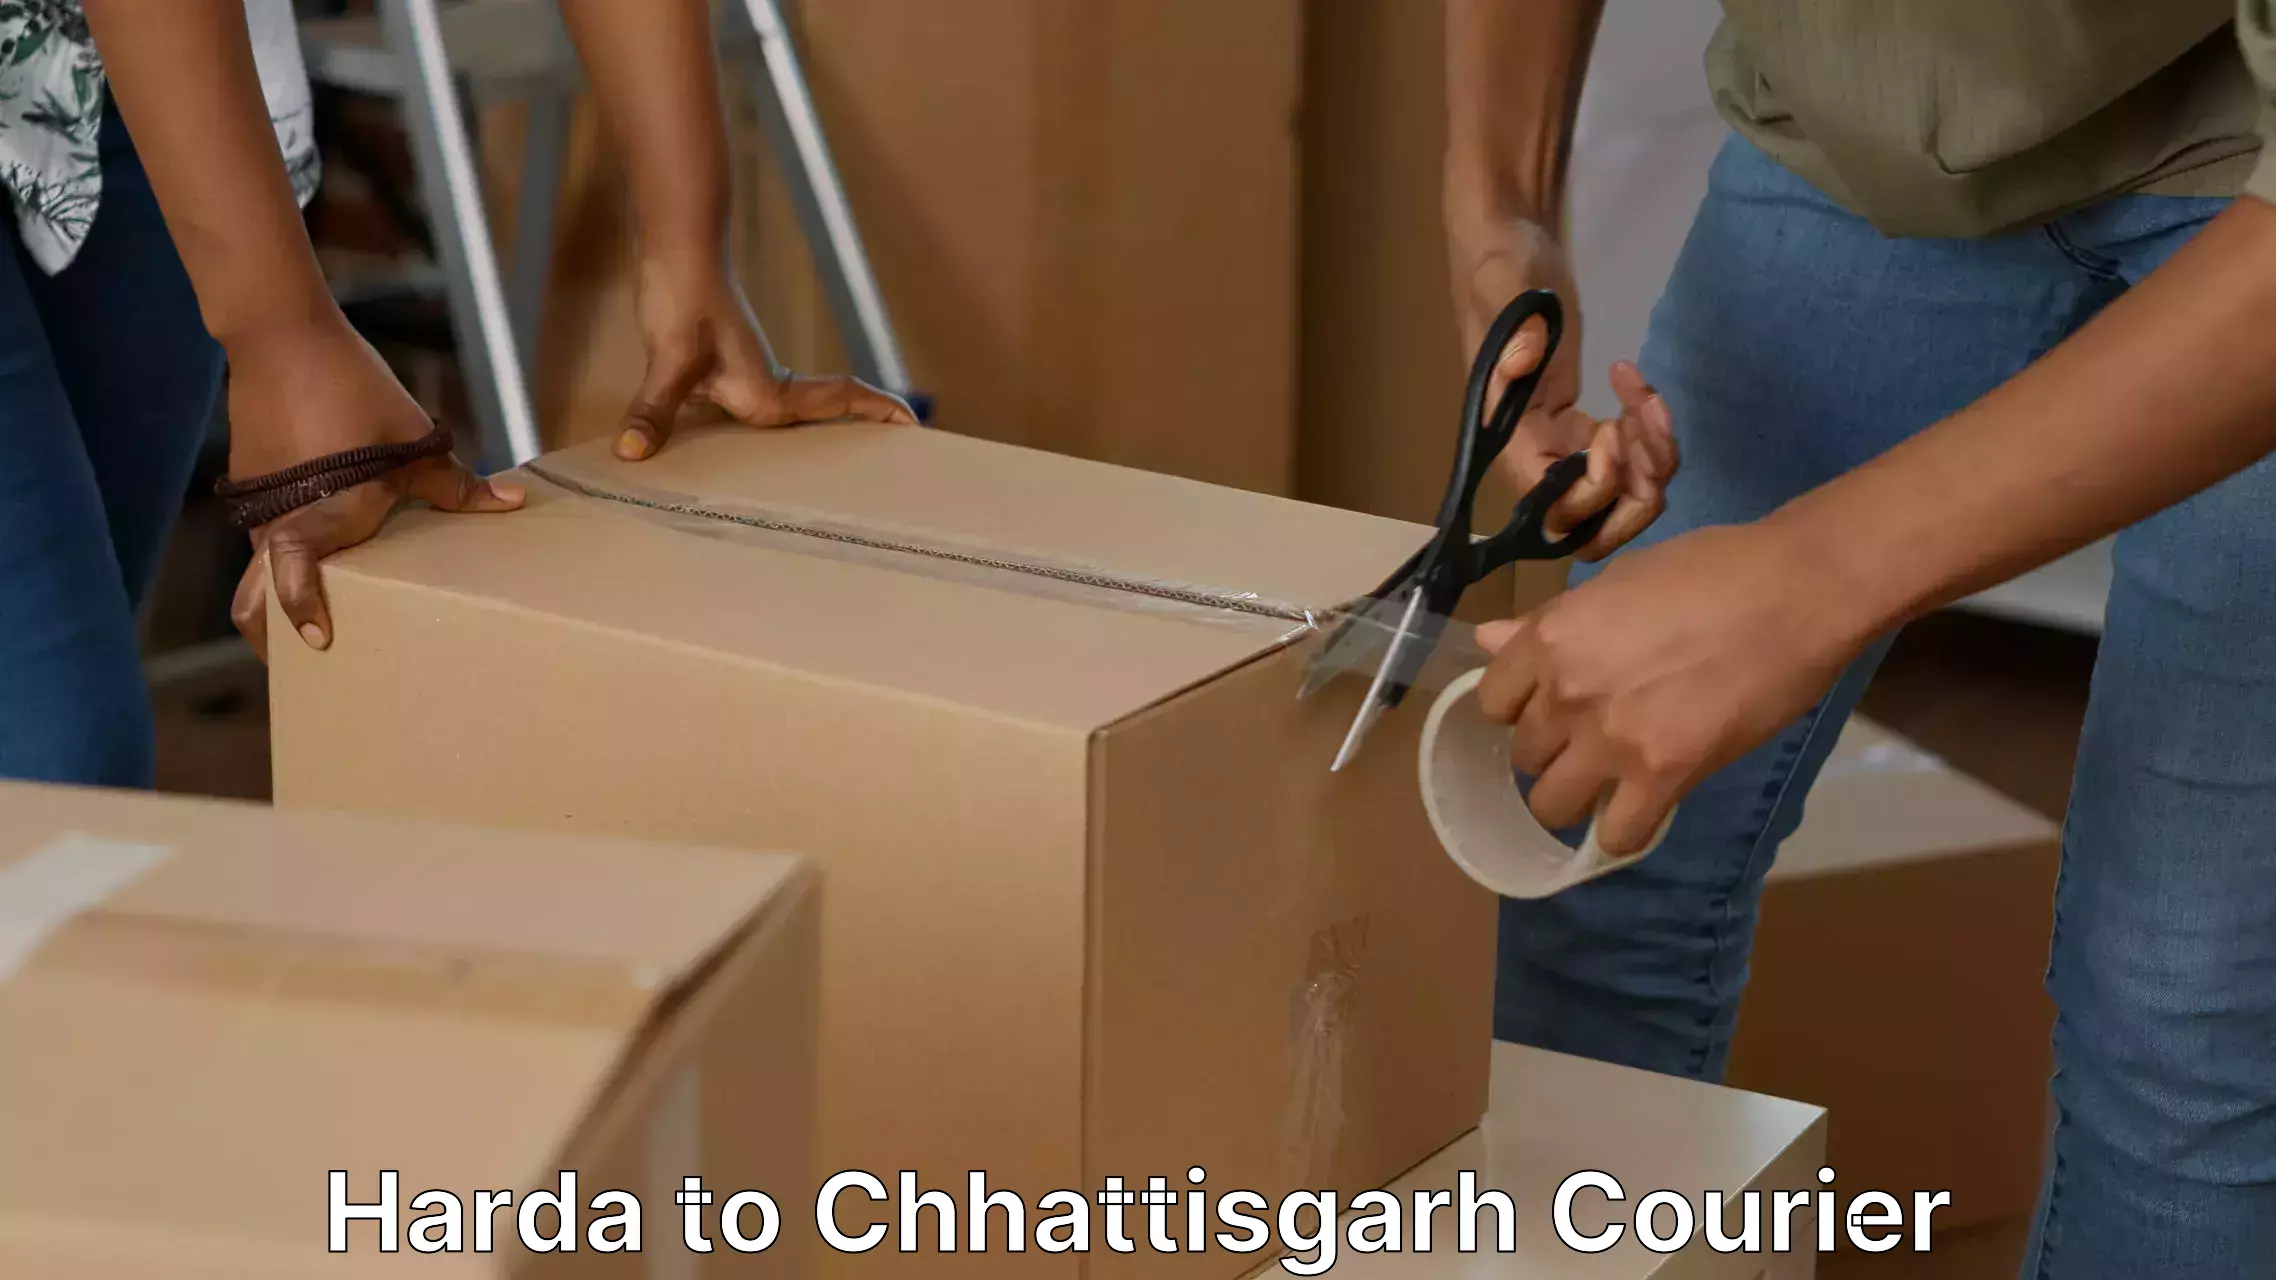 Professional packing services Harda to Patna Chhattisgarh